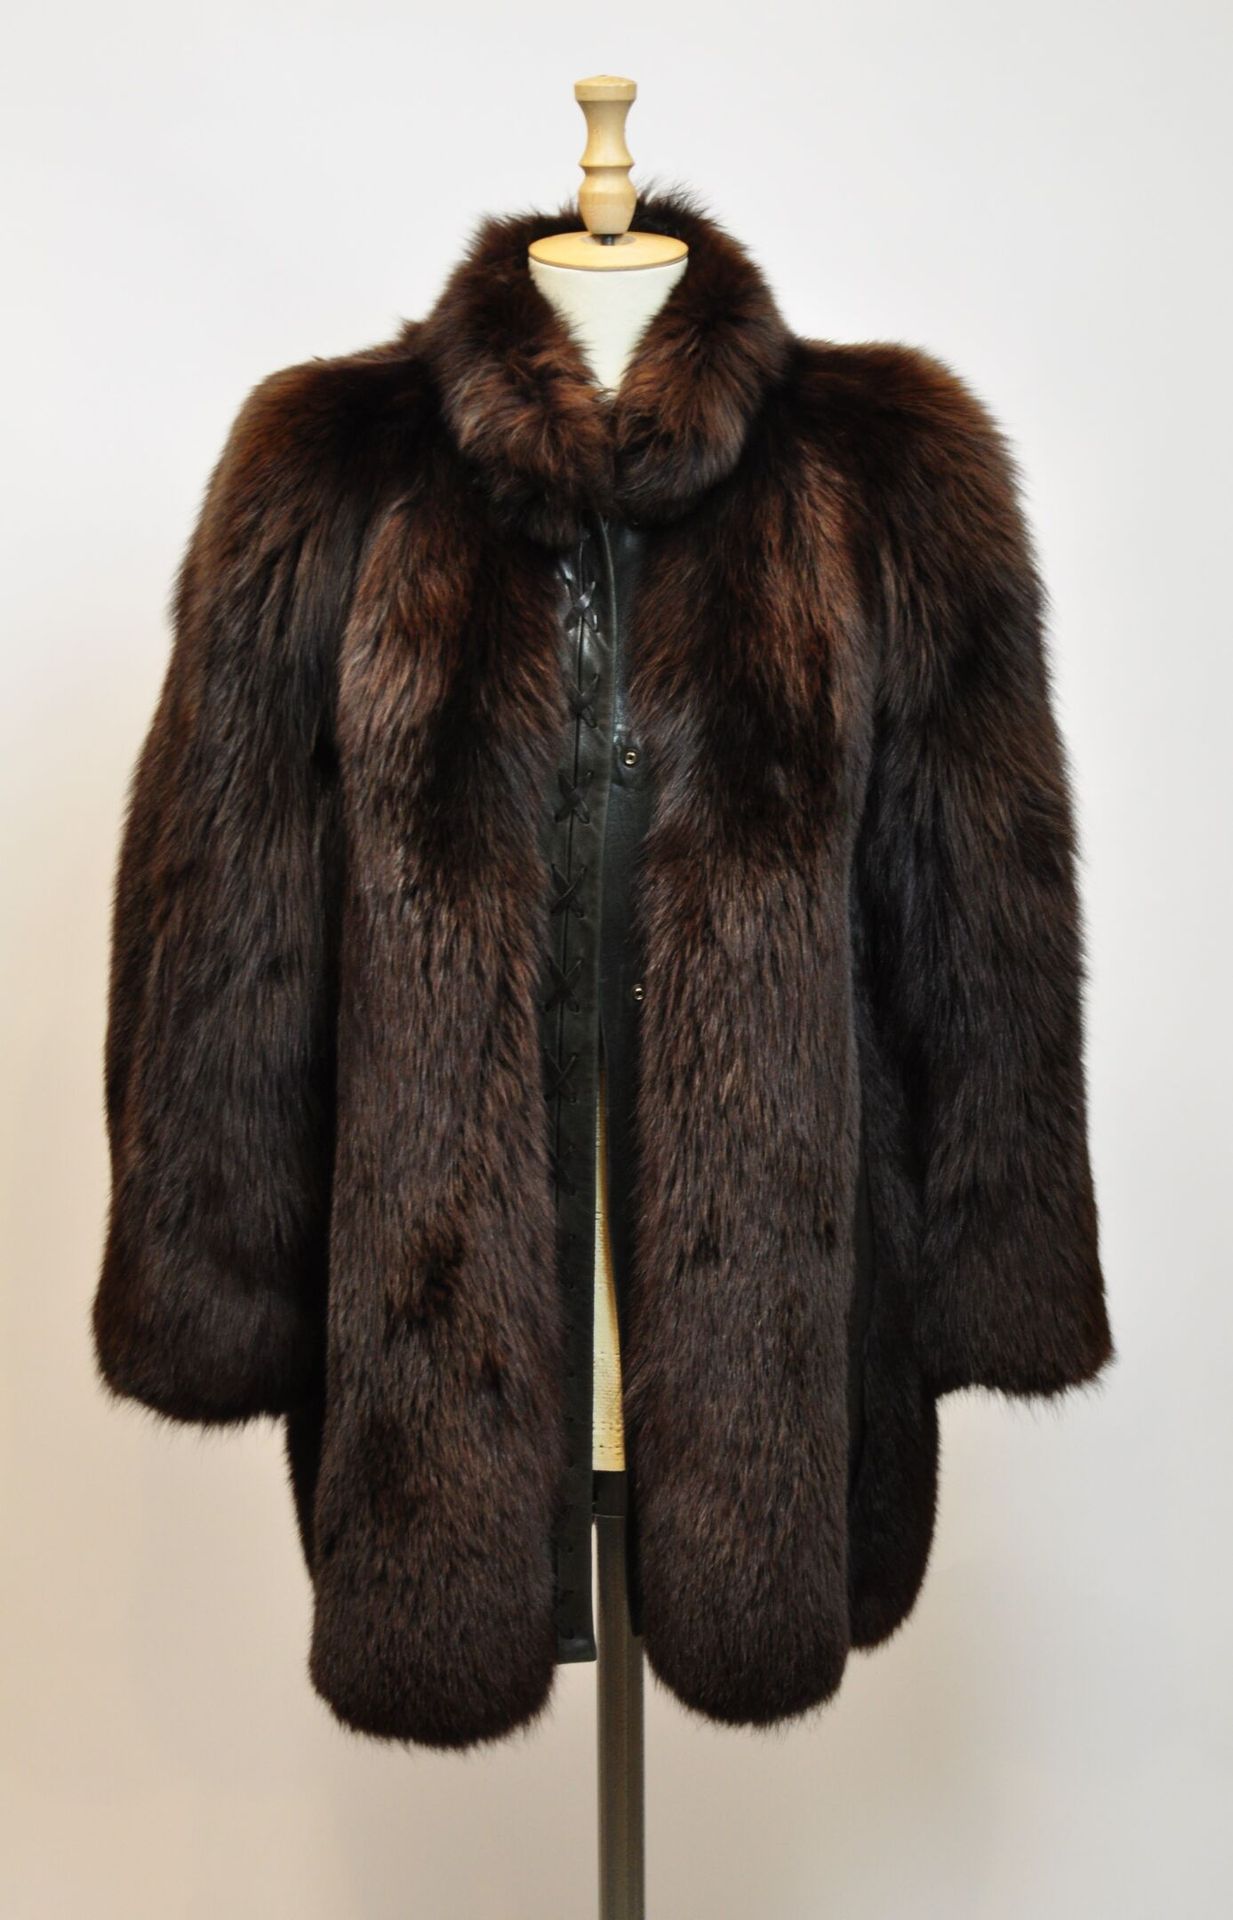 Null 狐狸皮外套，铜色亮点和黑色皮革。尺寸40

(状况良好，有一些磨损)





拍卖会将于2021年12月20日（星期一）在巴黎第十五区举行，只接受预&hellip;